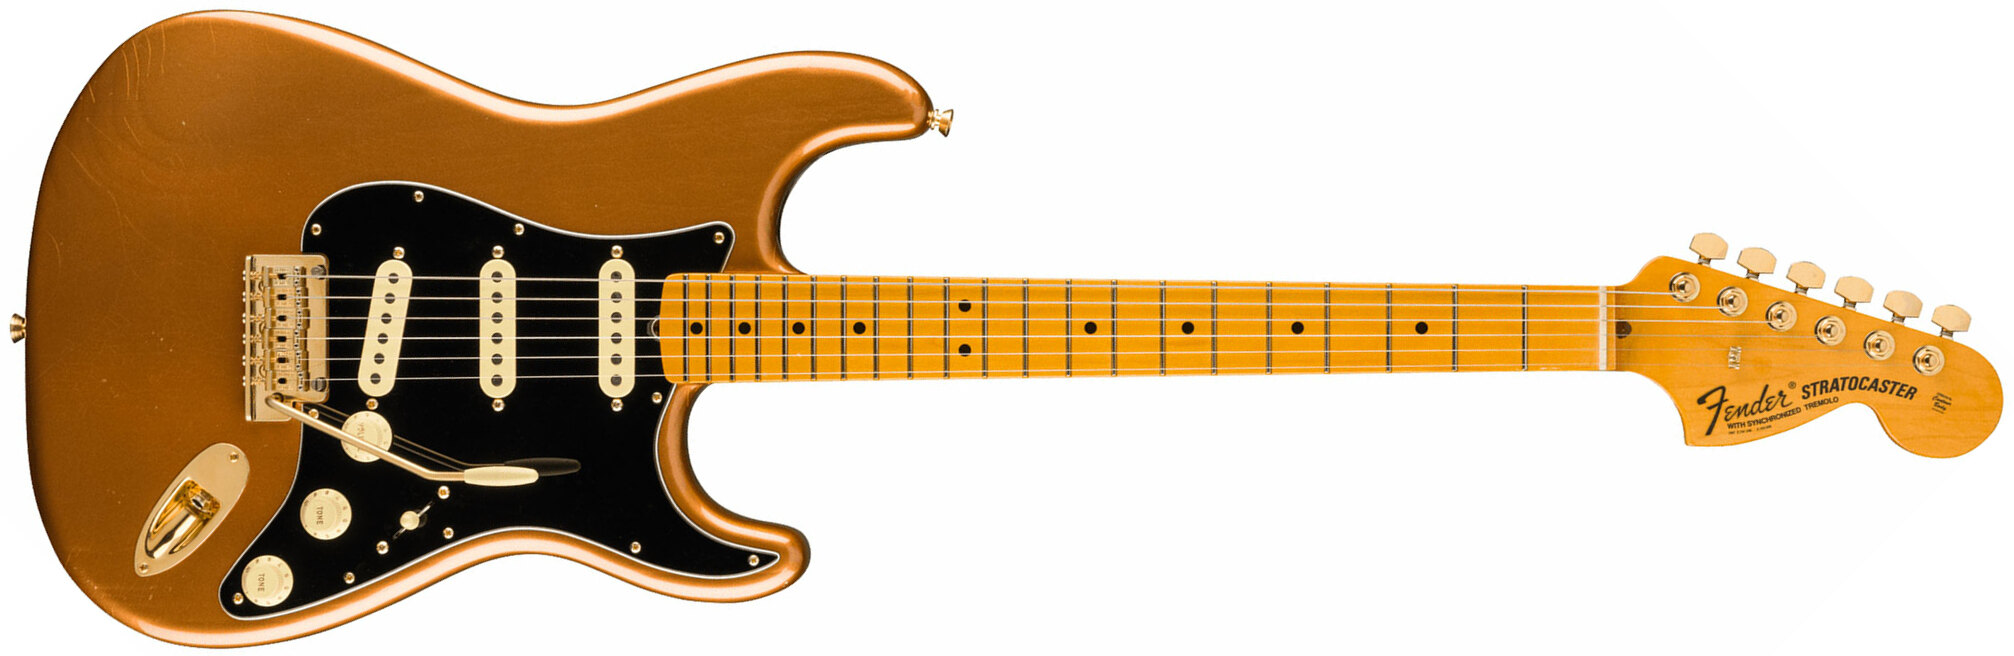 Fender Bruno Mars Strat Usa Signature 3s Trem Mn - Mars Mocha - Kenmerkende elektrische gitaar - Main picture